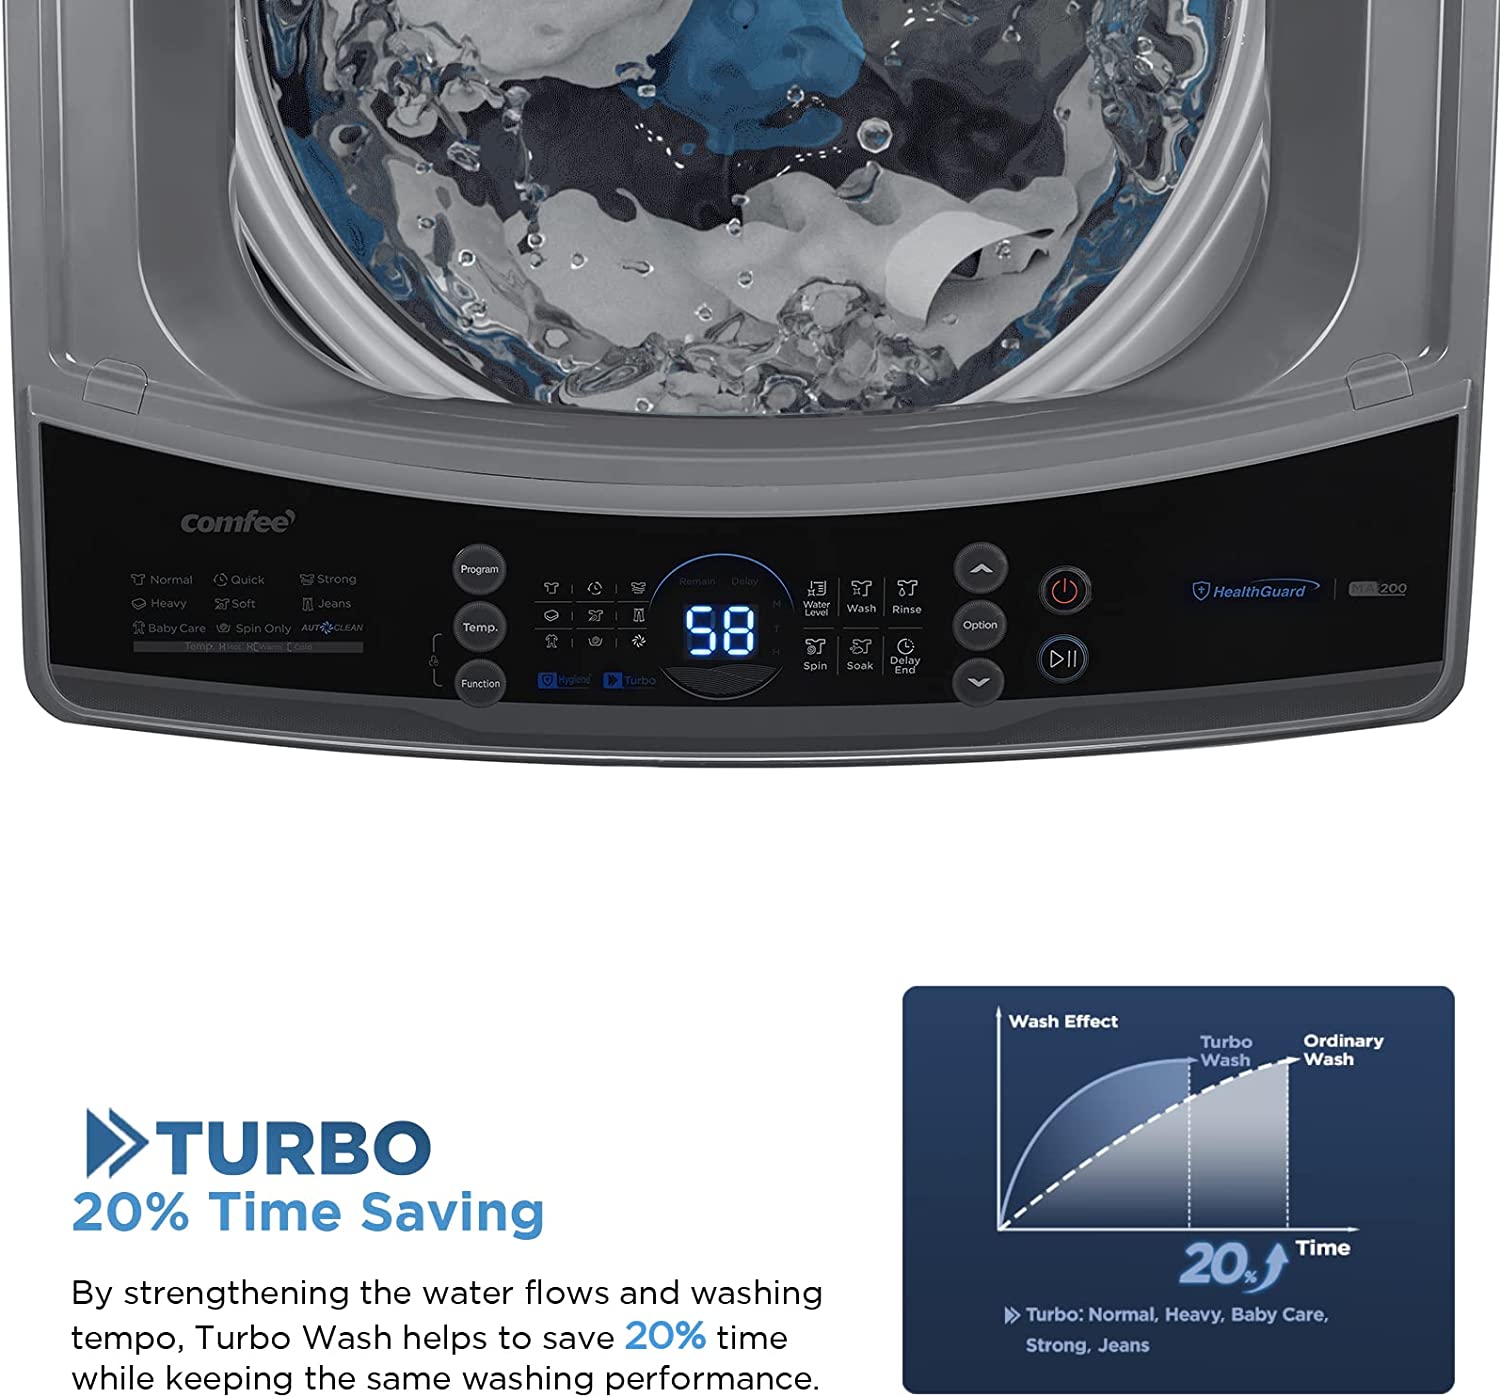 COMFEE’ Washing Machine 1.8 Cu.ft LED Portable Washing Machine - $210